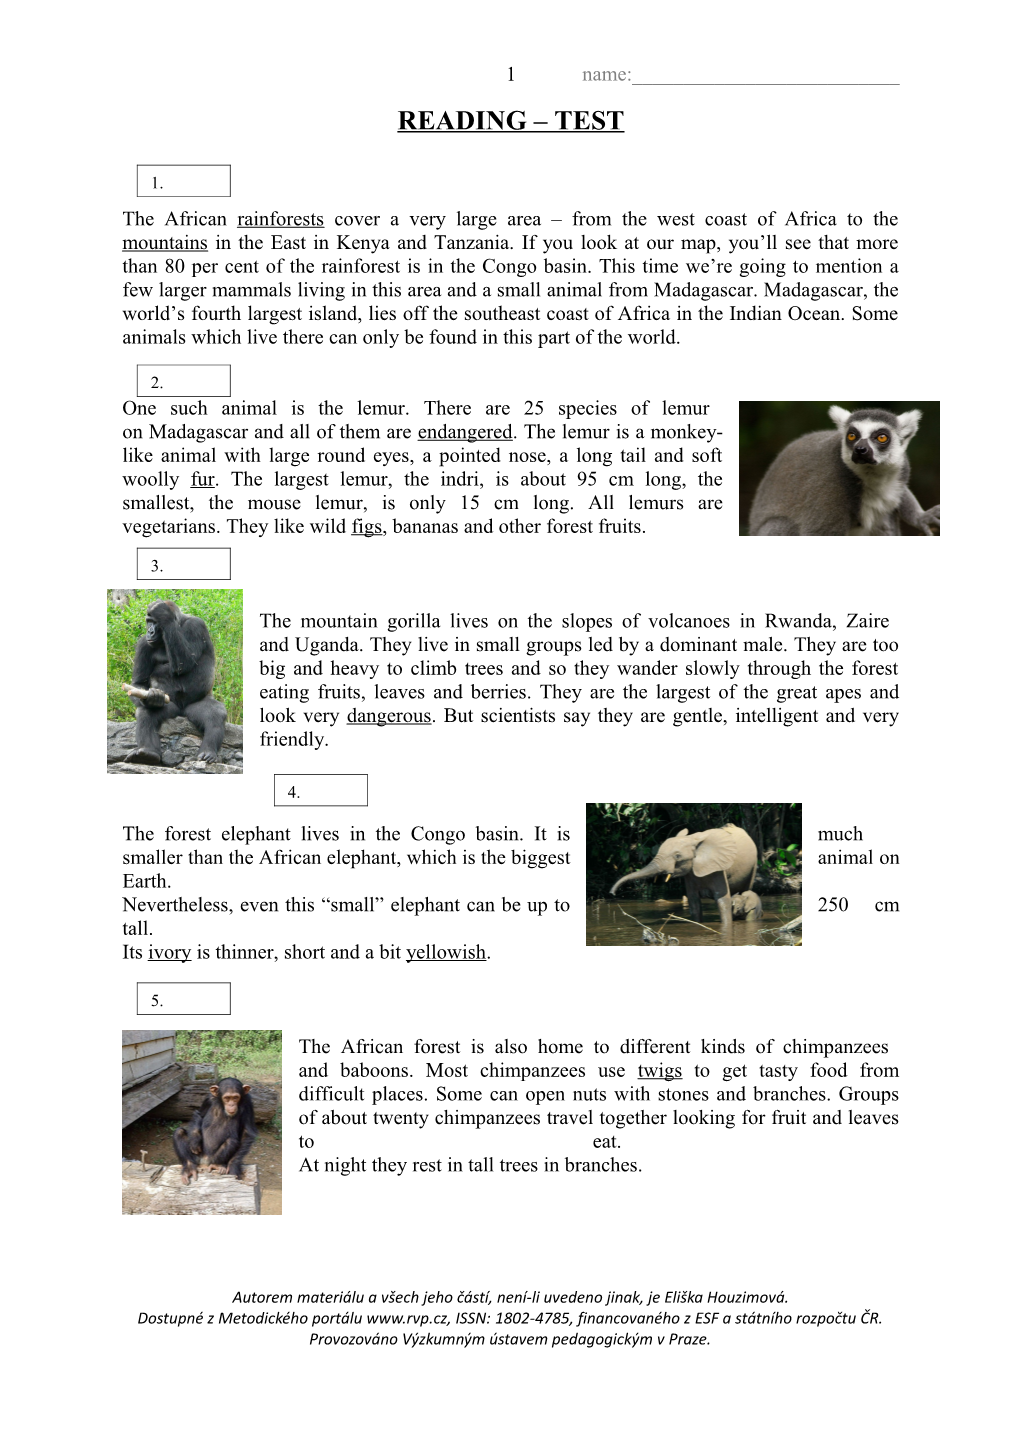 Wild Animals - Testing Reading Comprehension